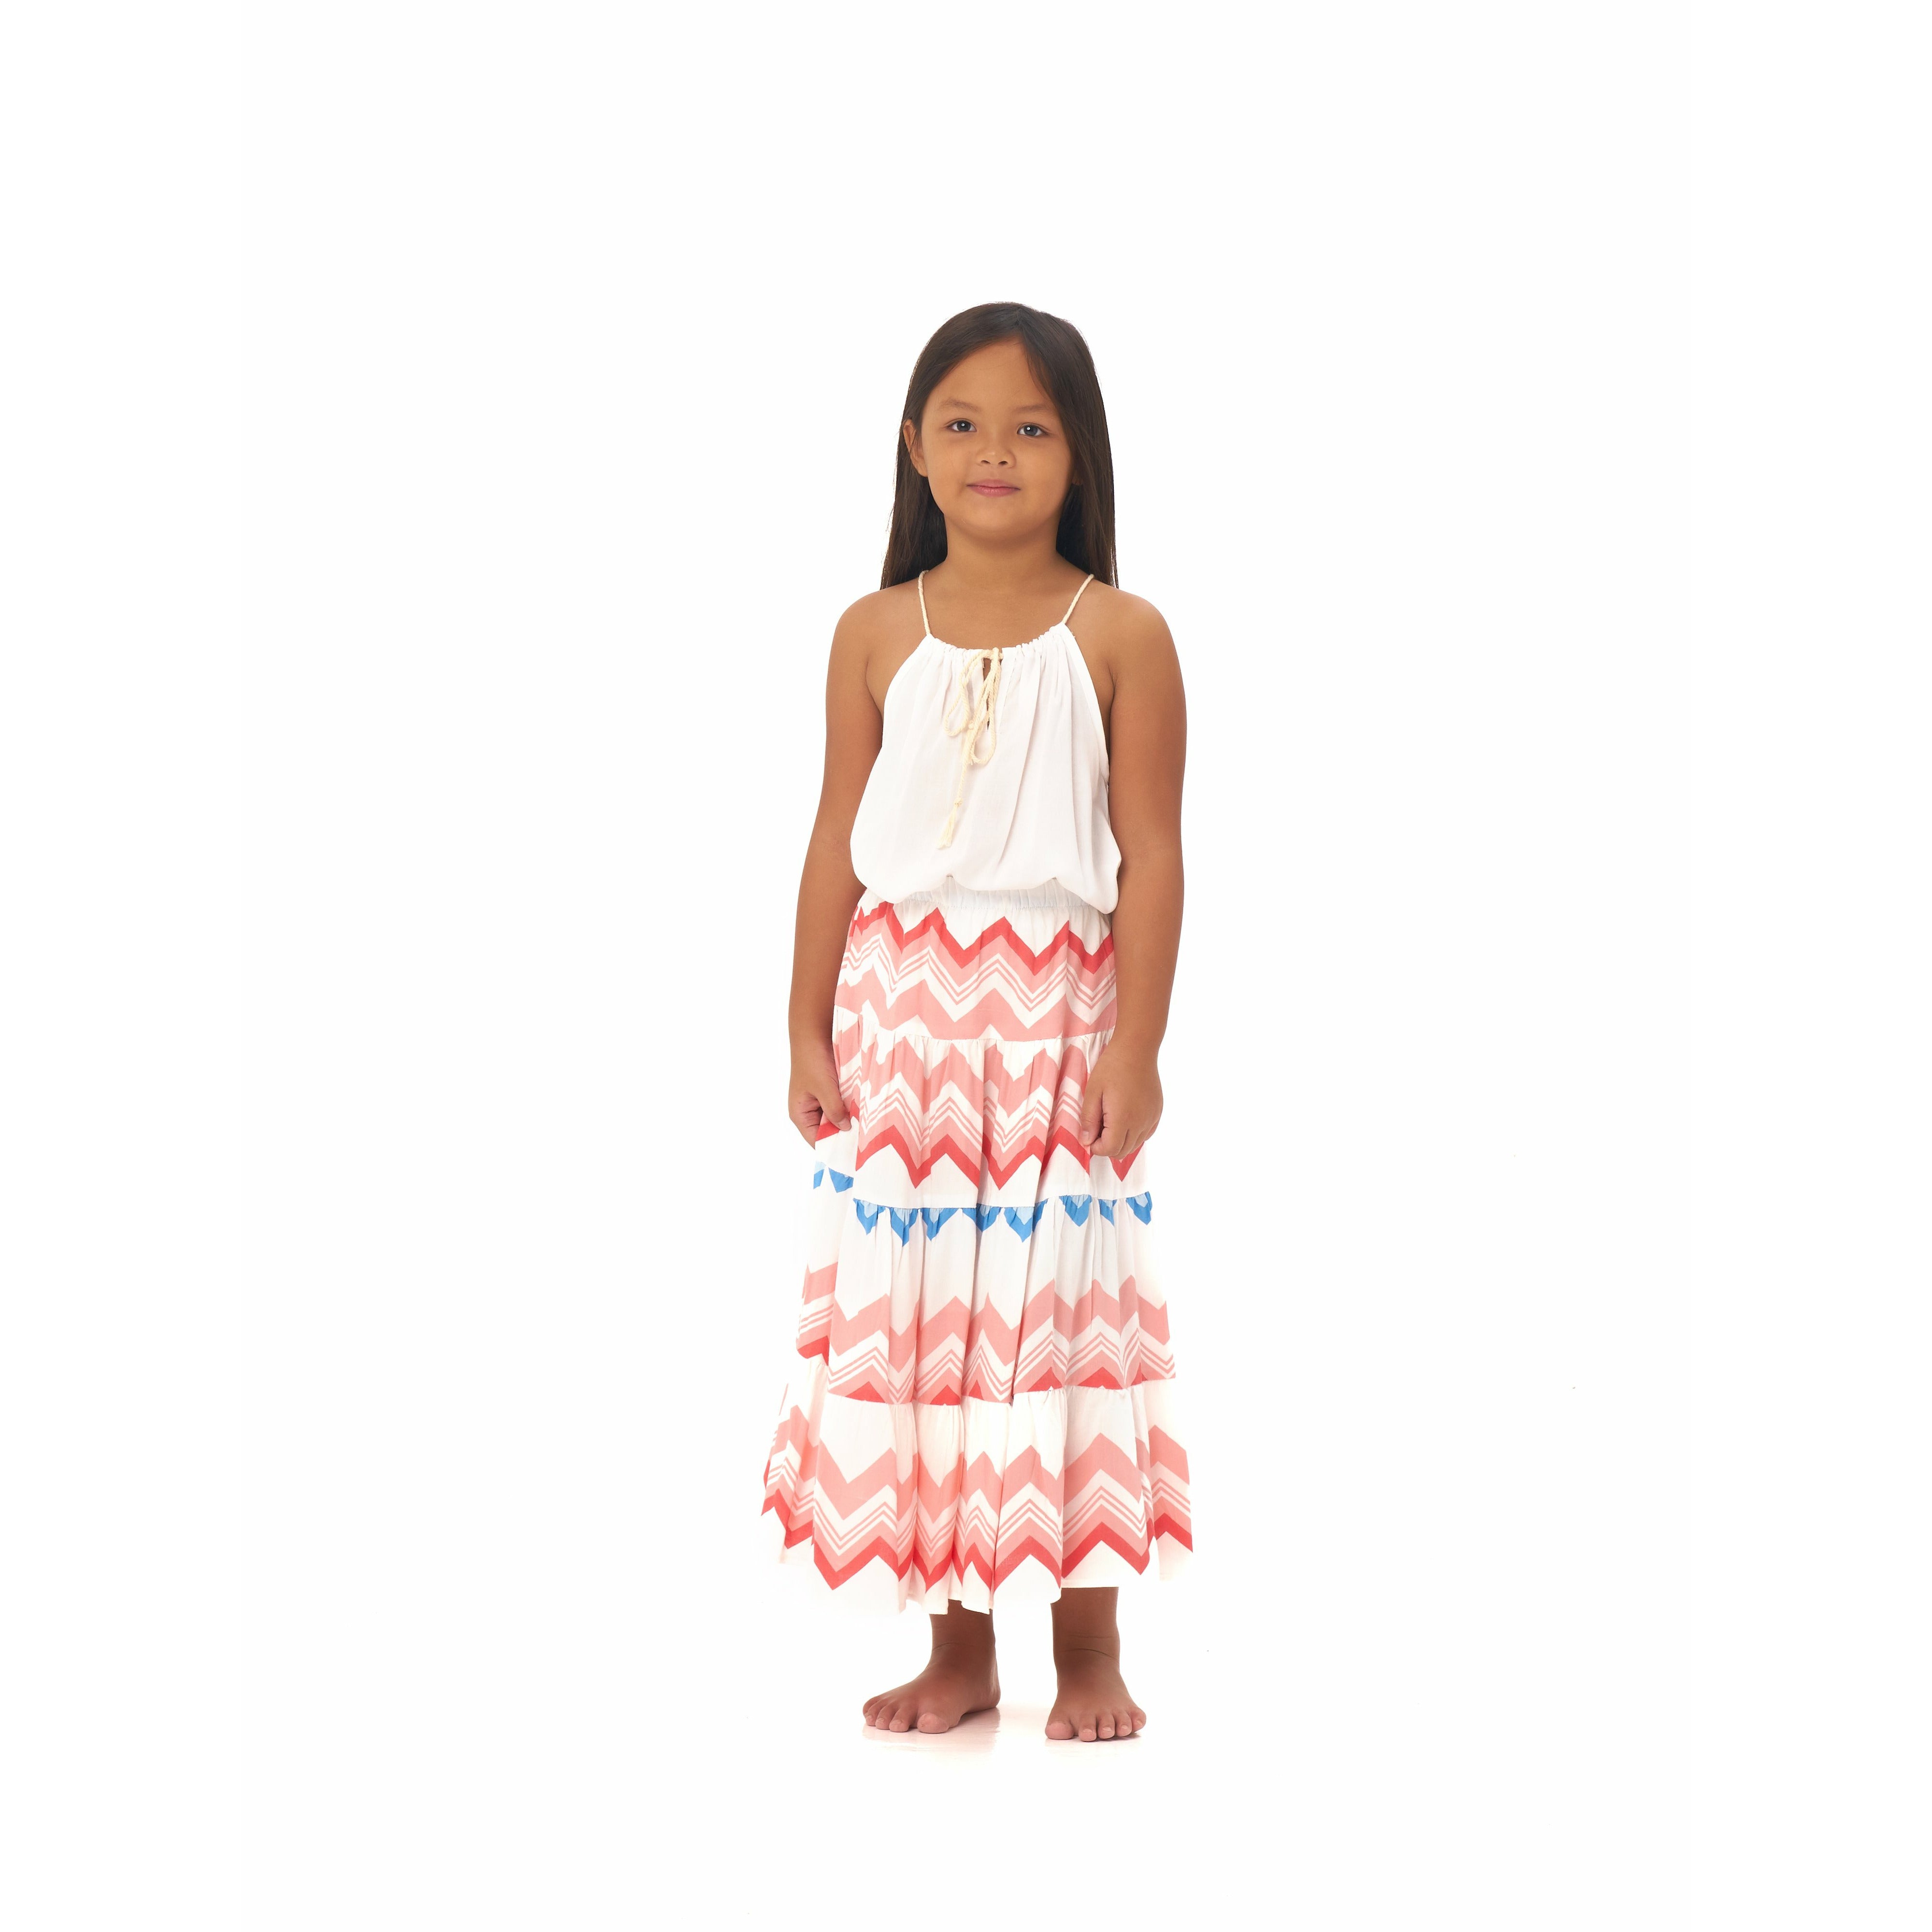 Festival Skirt in Colorful Chevron - Indigo Kids